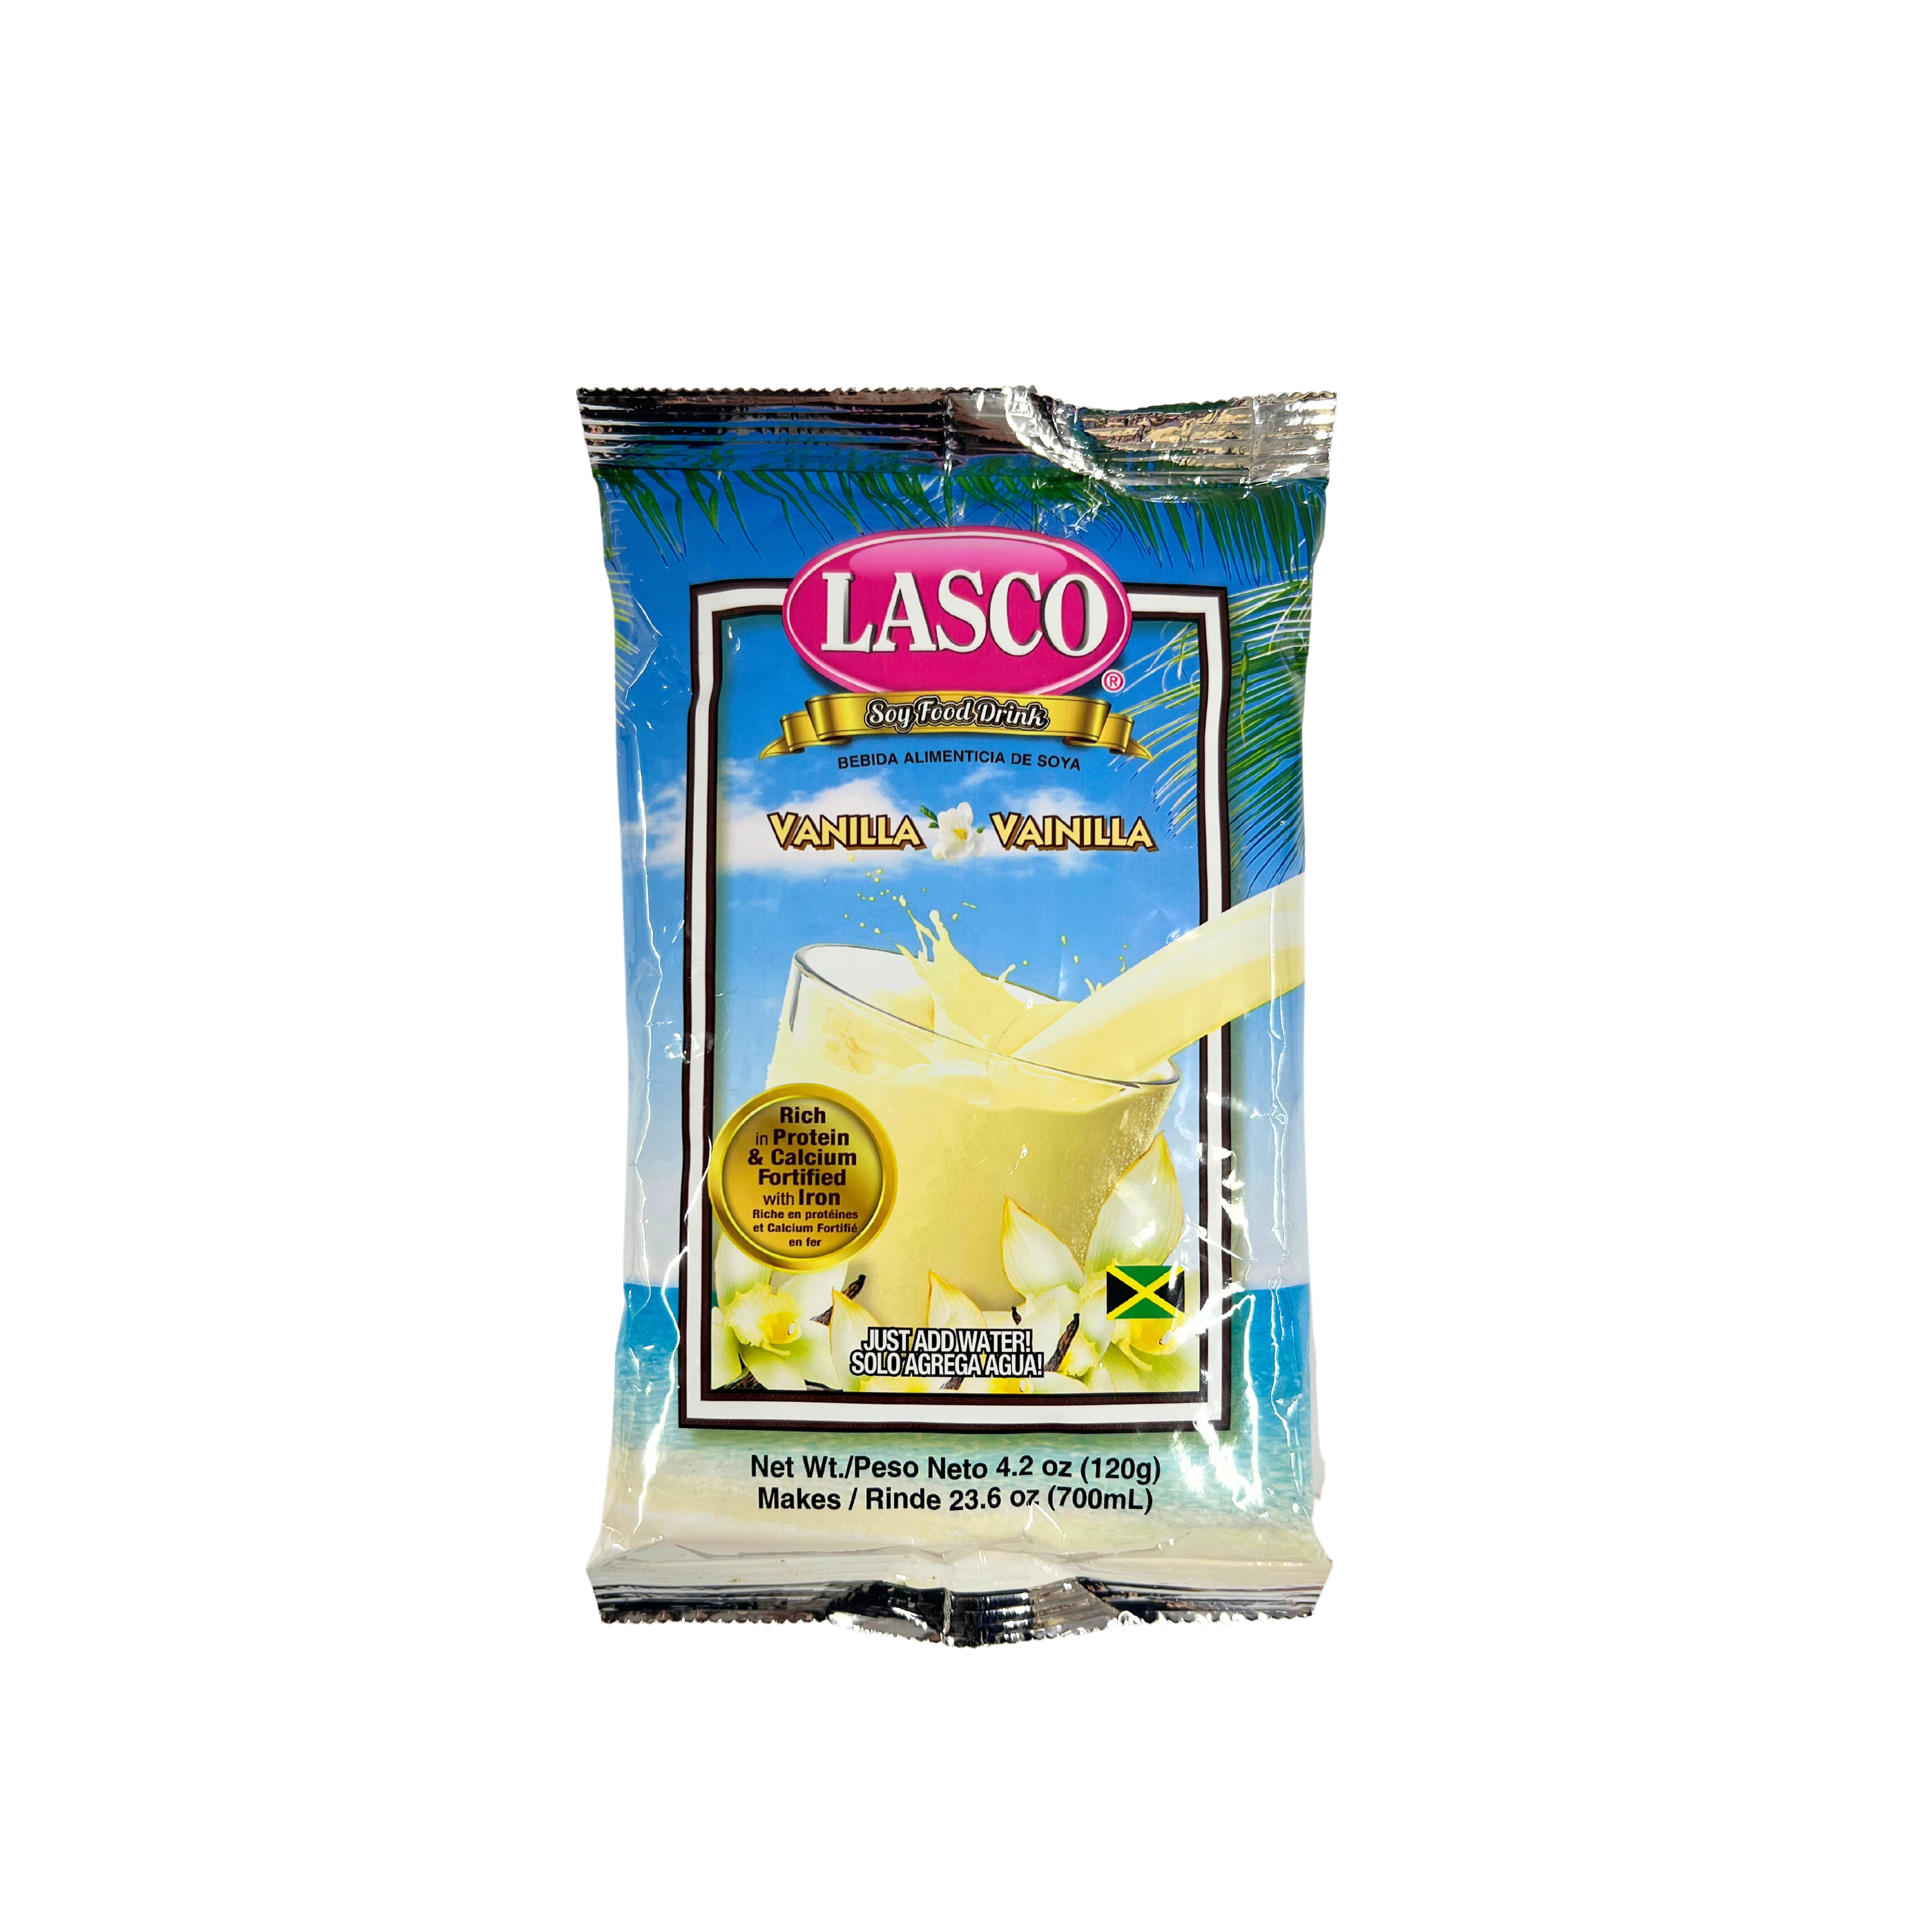 Lasco Vanilla Powder120g